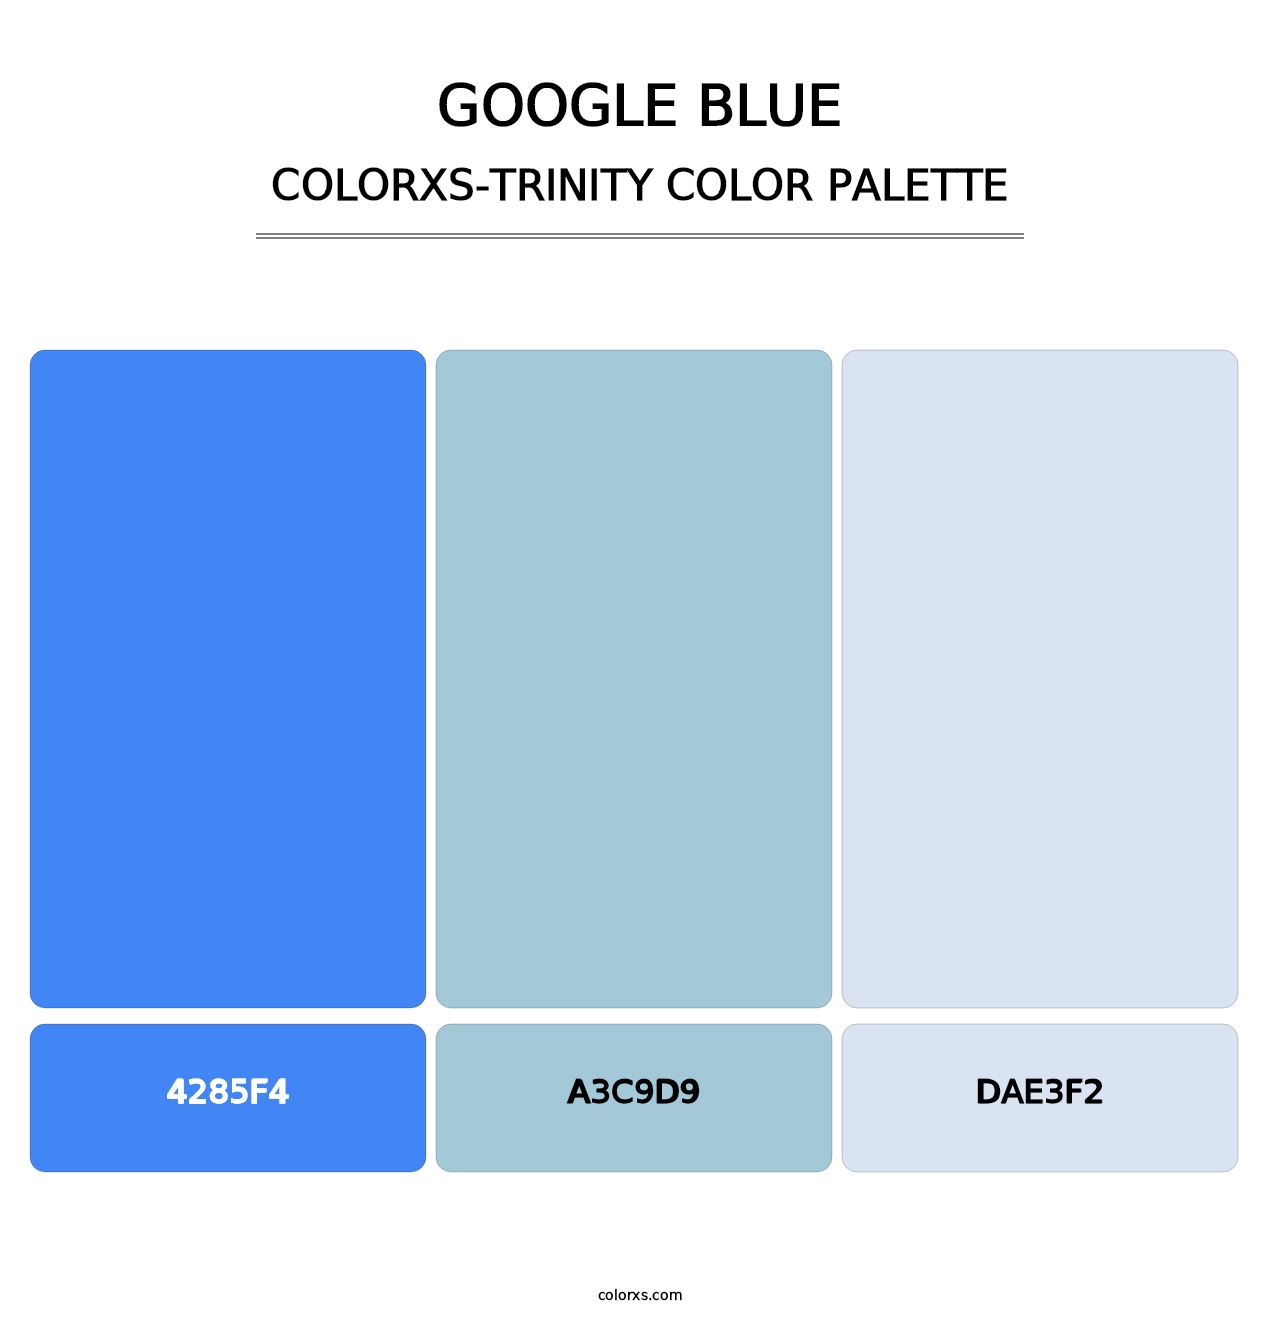 Google Blue - Colorxs Trinity Palette